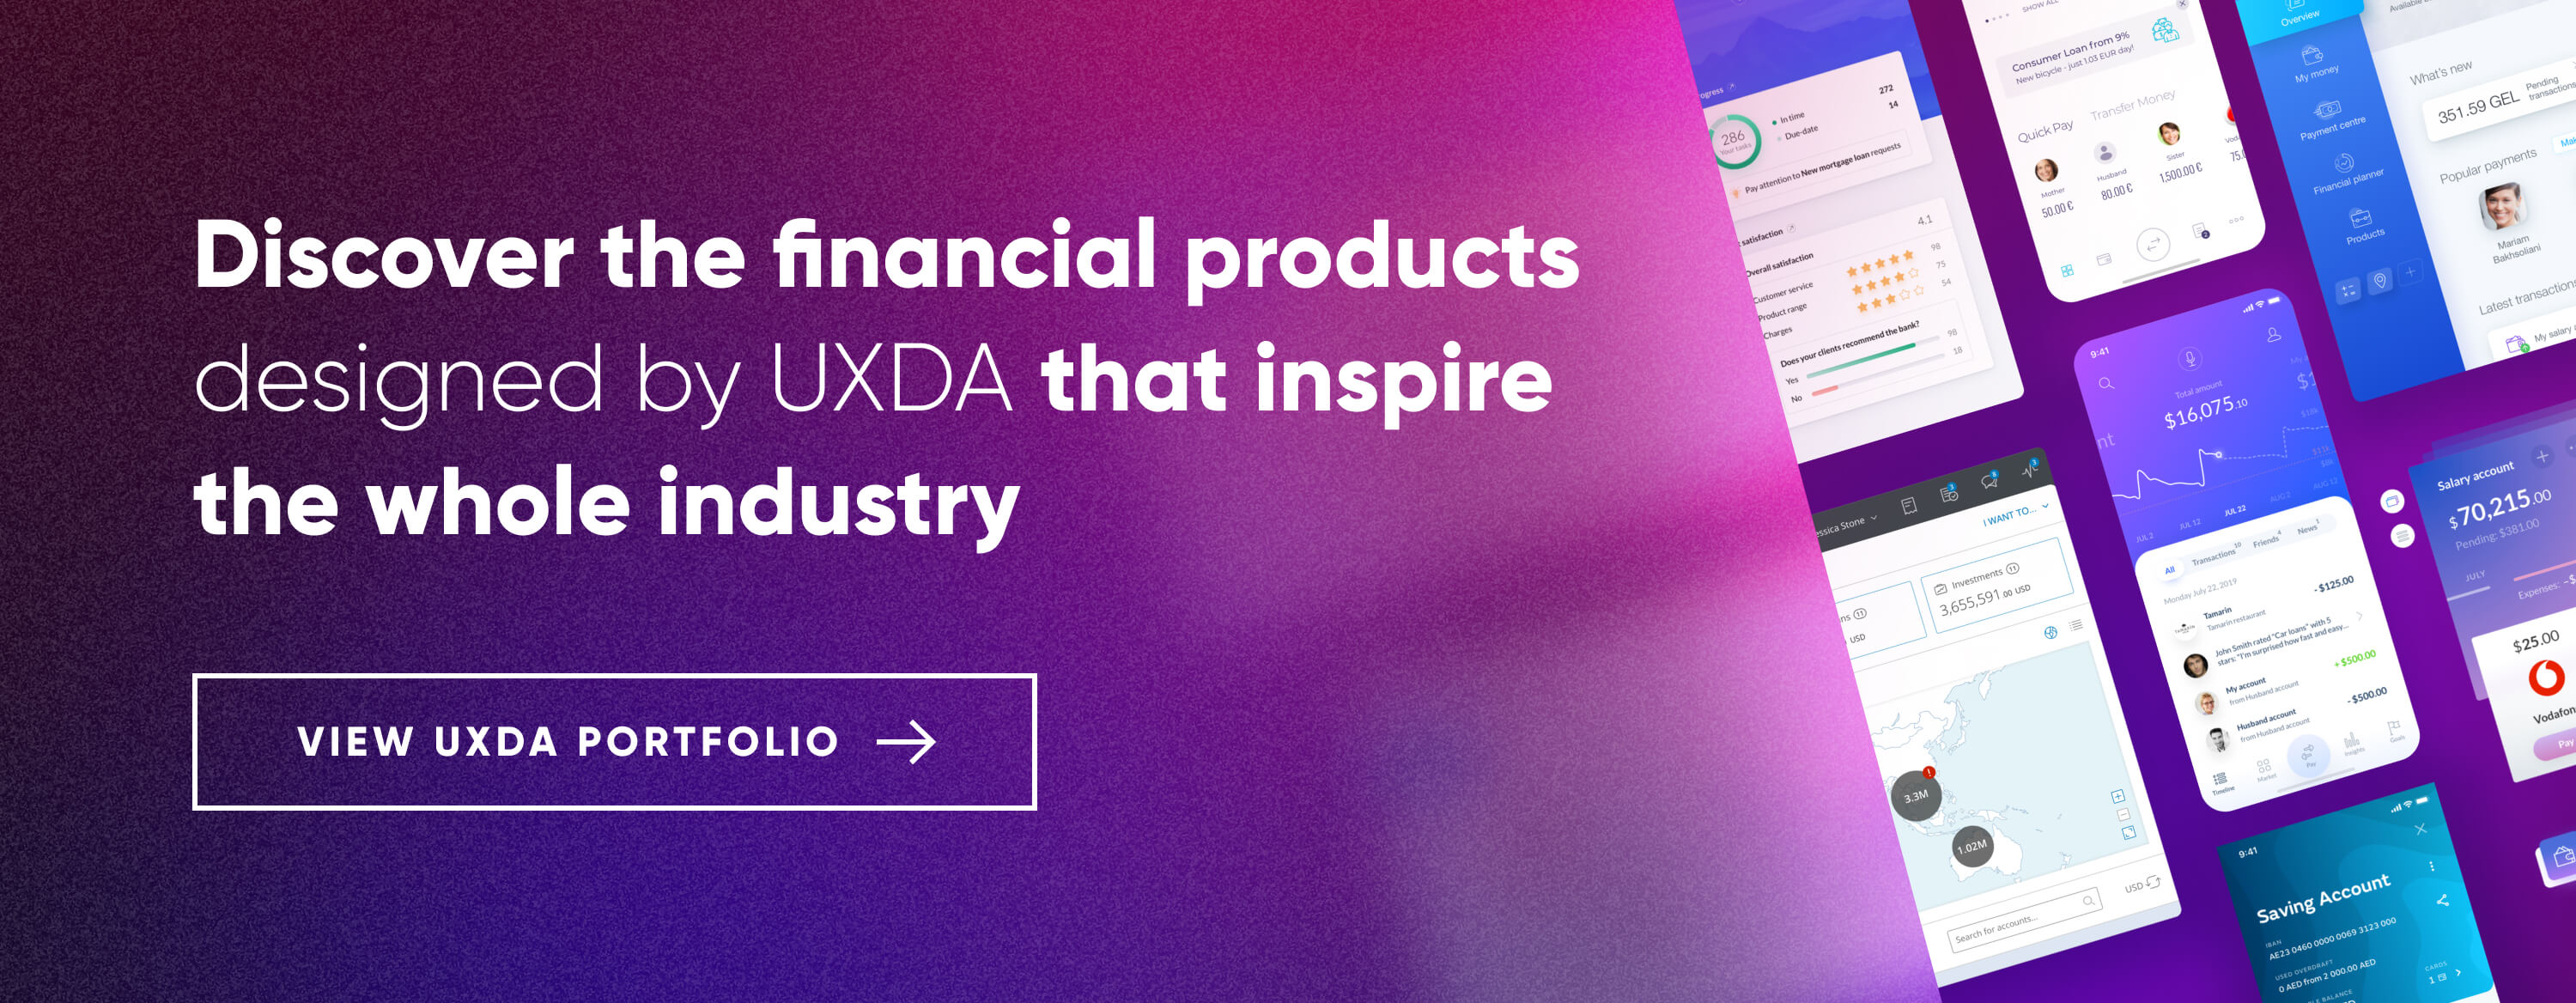 uxda-portfolio-financial-digital-product-inspire-industry-ux-1667398930.jpg